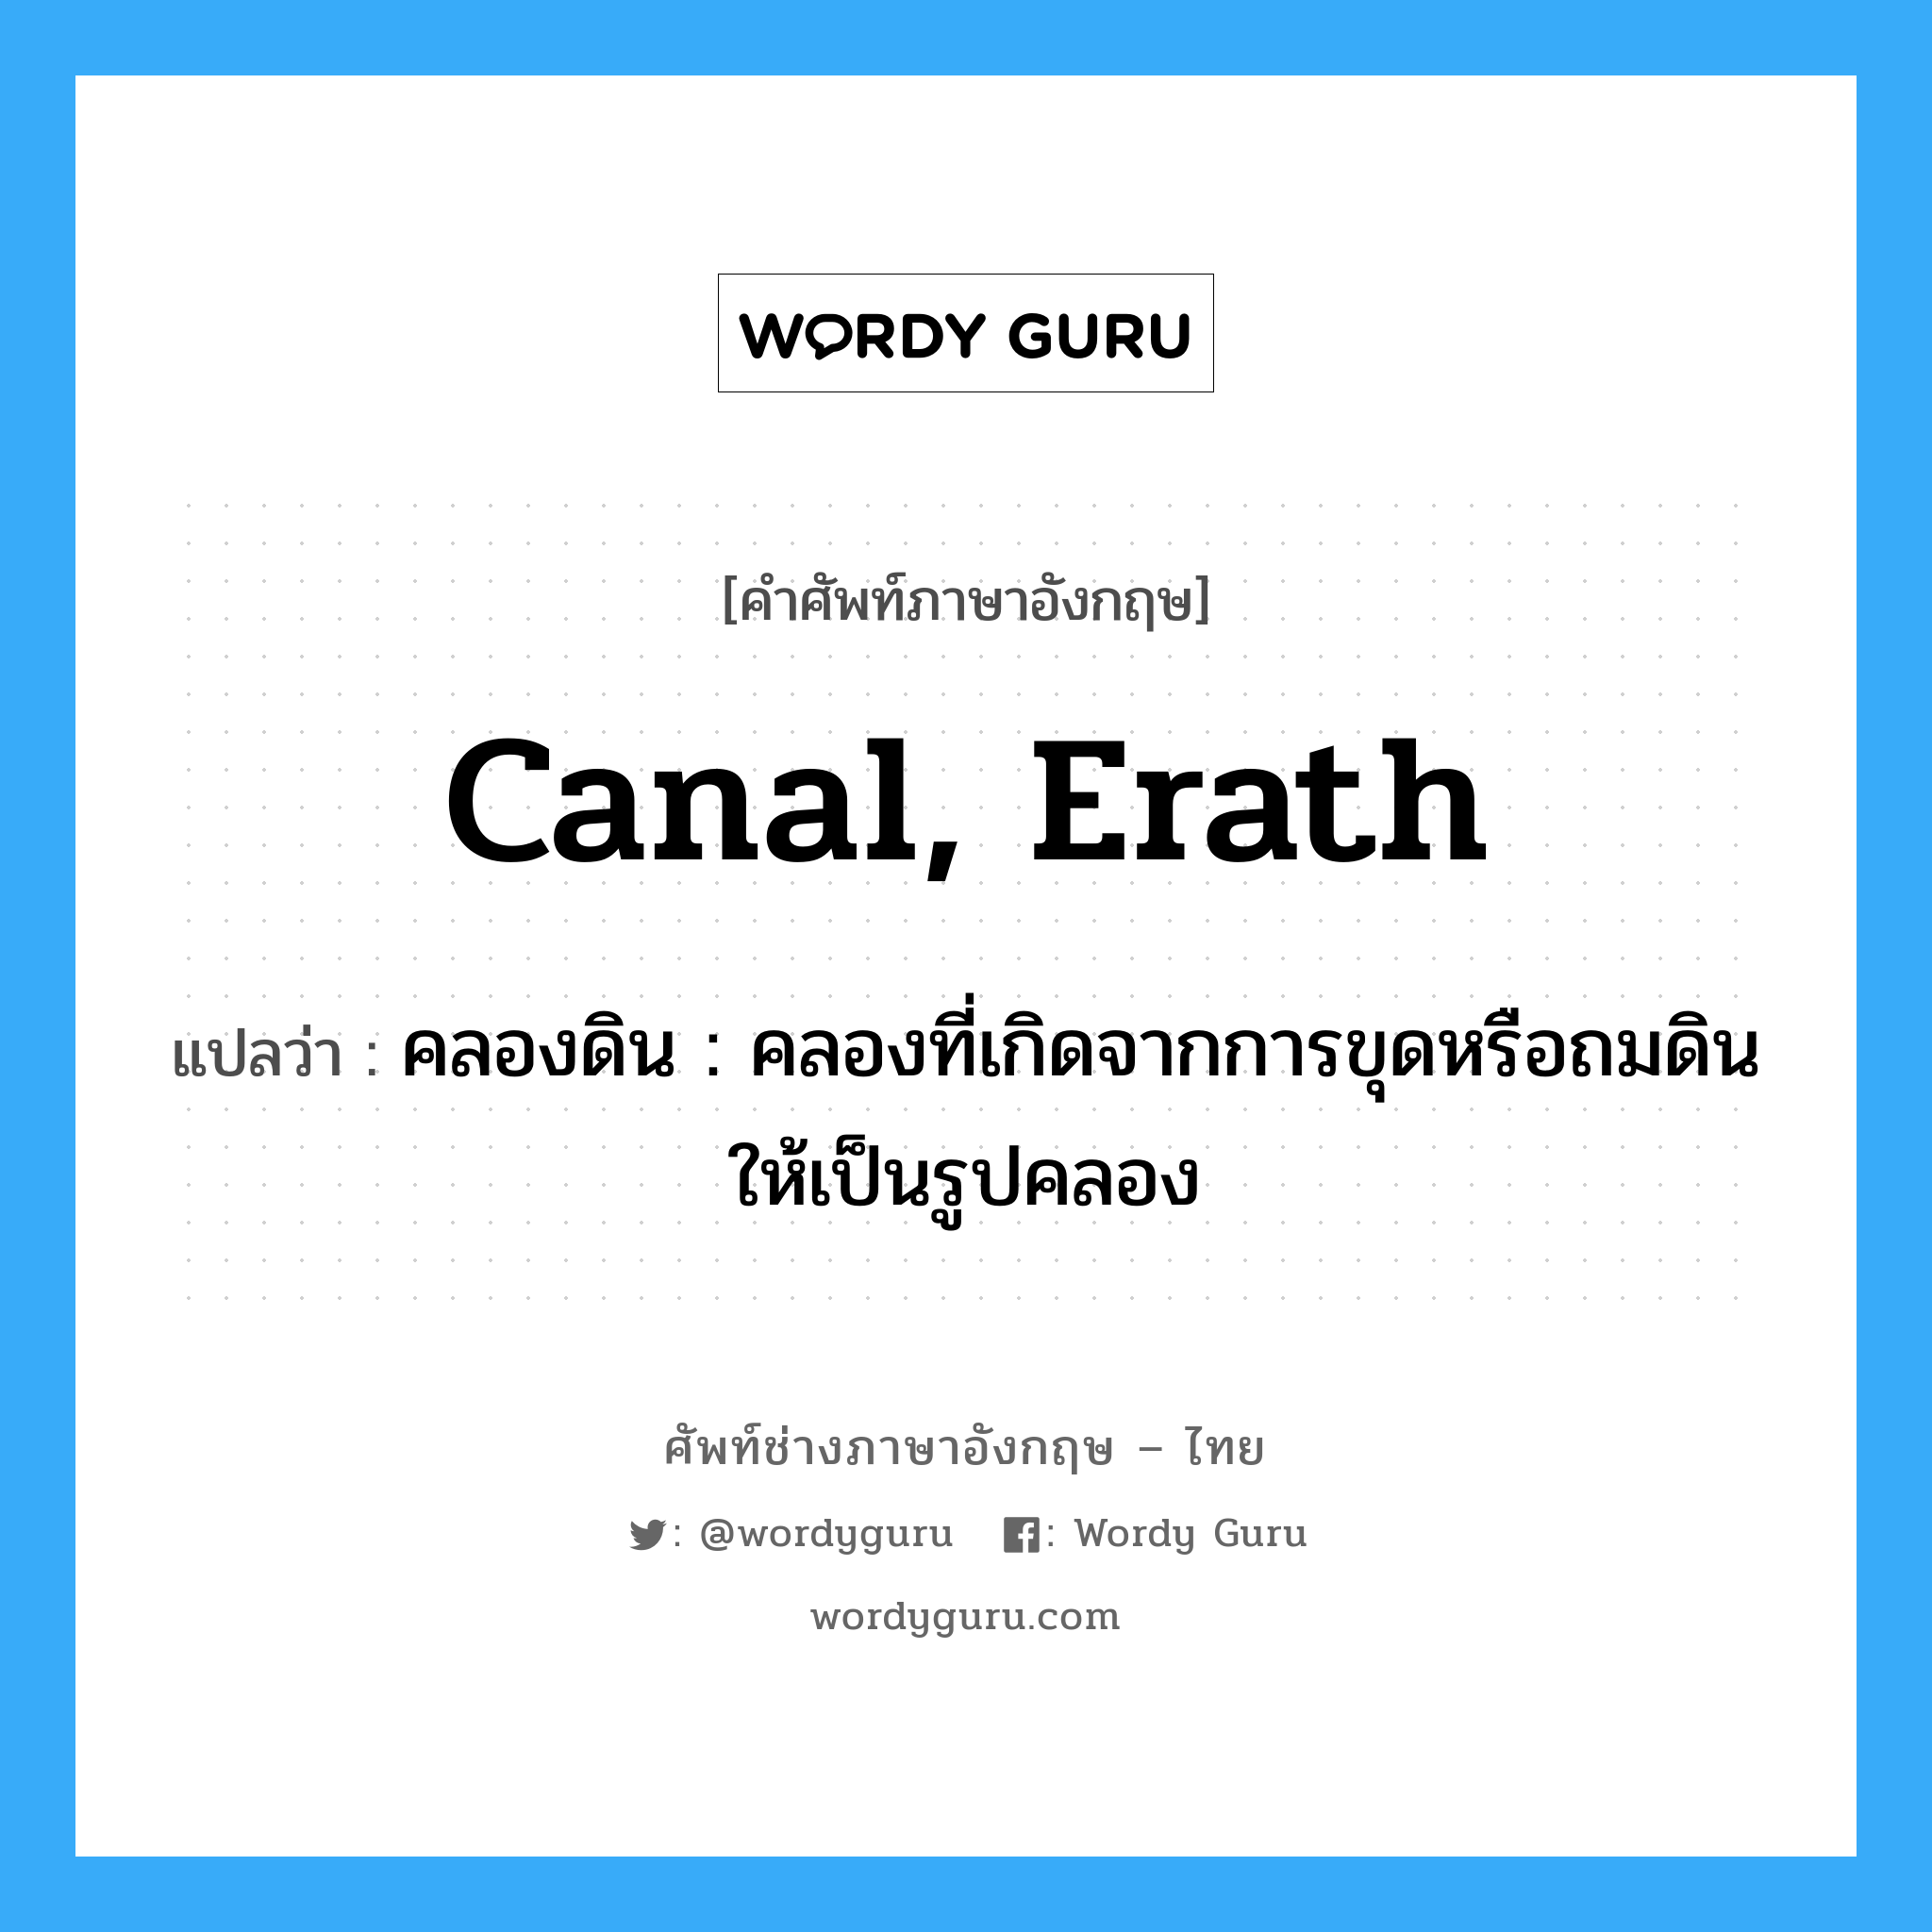 canal, erath แปลว่า?, คำศัพท์ช่างภาษาอังกฤษ - ไทย canal, erath คำศัพท์ภาษาอังกฤษ canal, erath แปลว่า คลองดิน : คลองที่เกิดจากการขุดหรือถมดินให้เป็นรูปคลอง